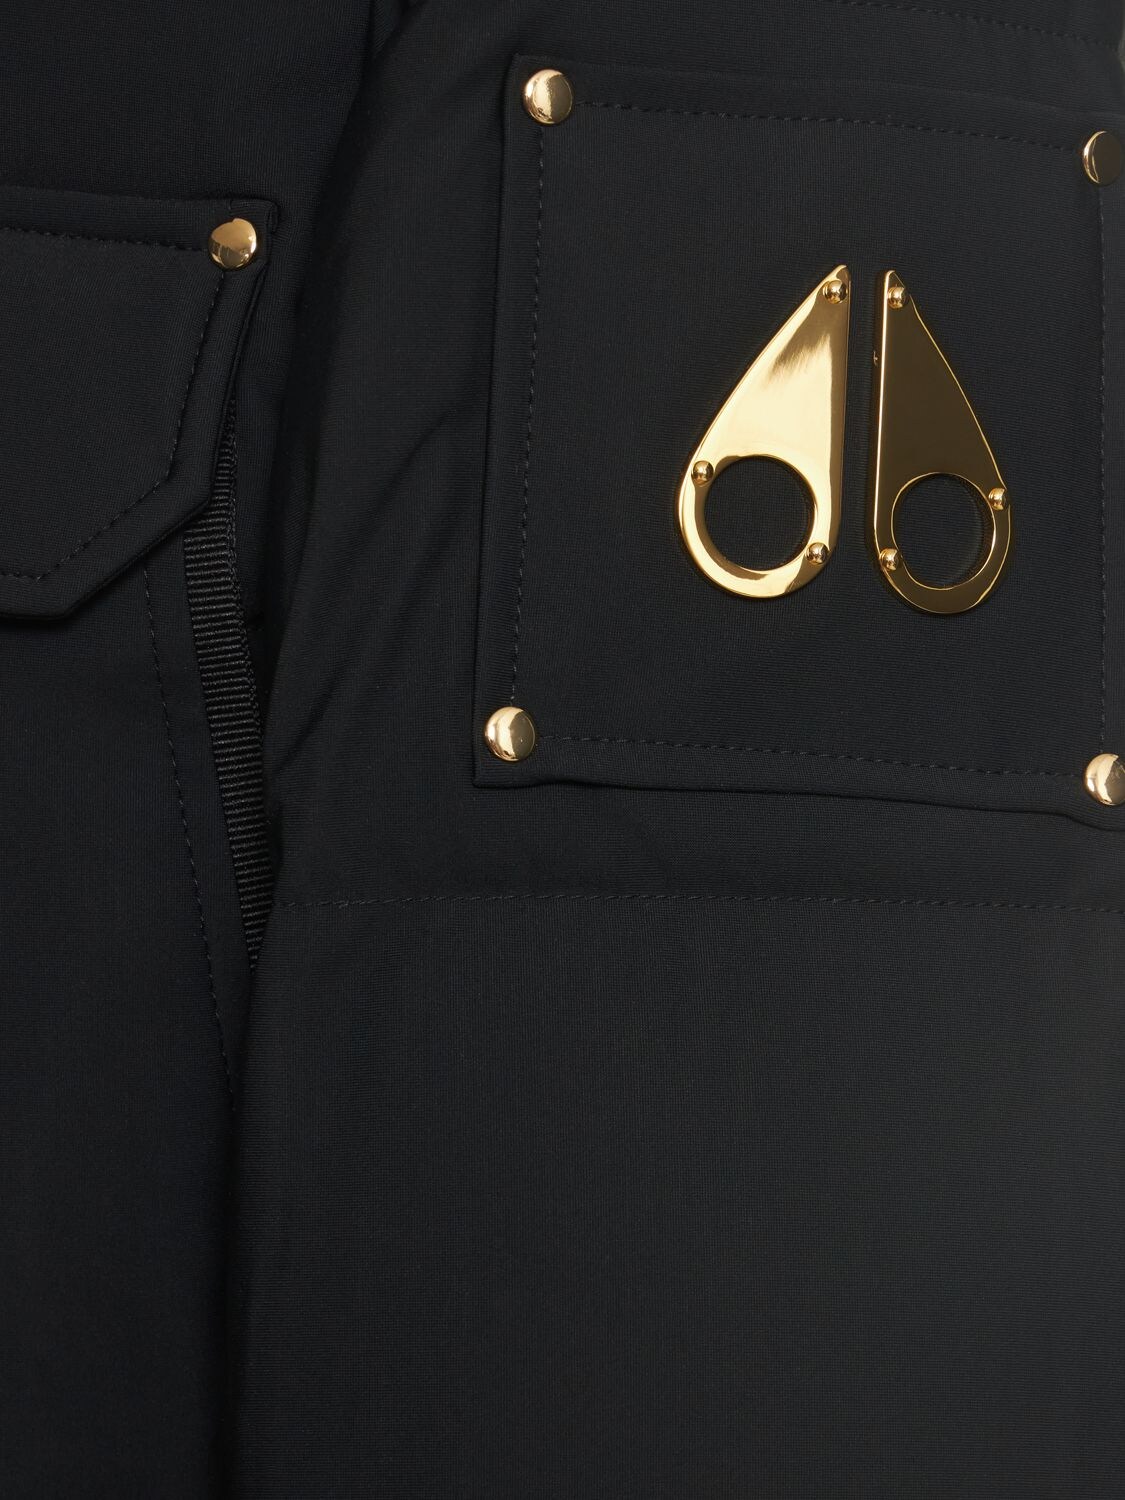 Shop Moose Knuckles Skillman Nylon Blend Down Jacket In Black